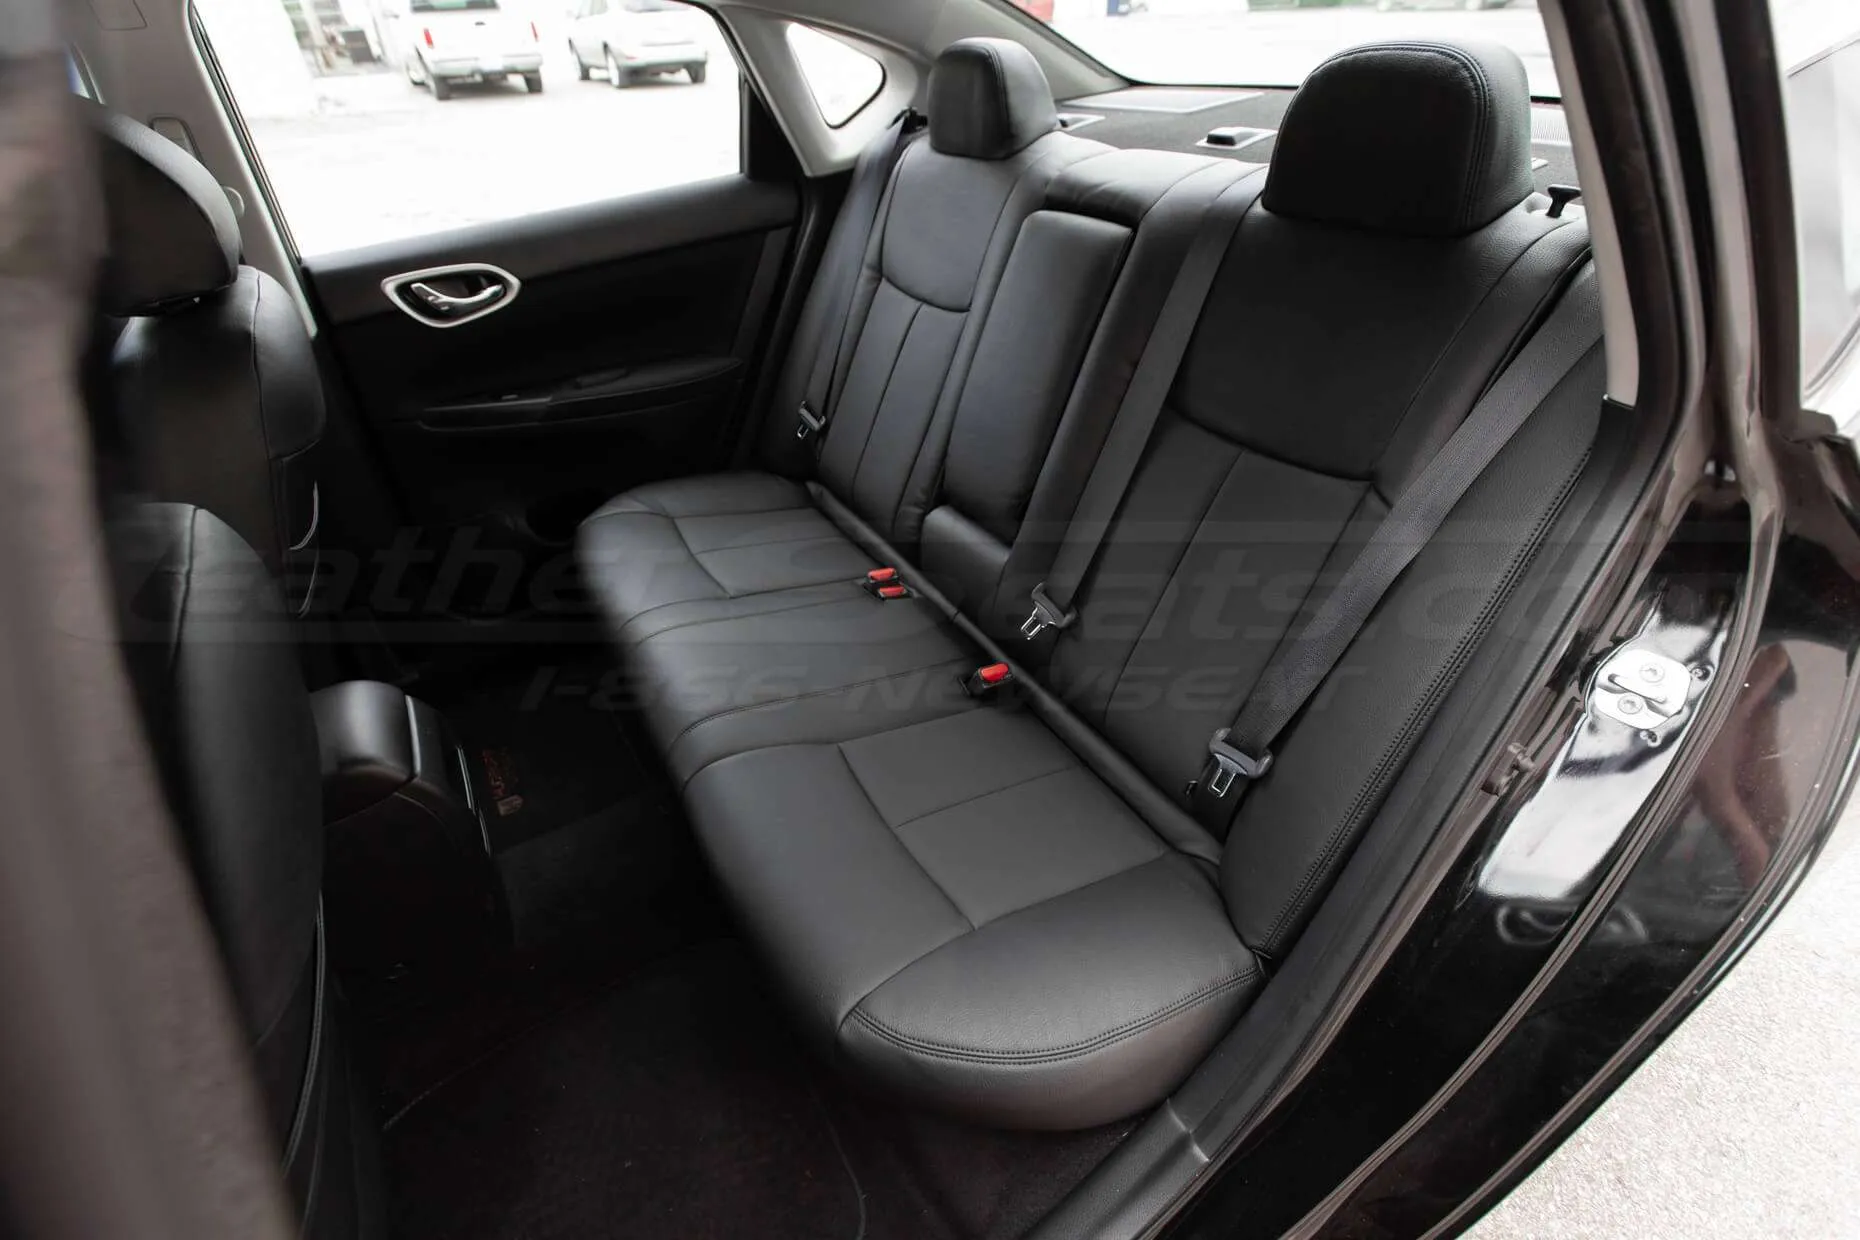 Nissan Sentra Leather Seats - Black - Installed - Rear seats